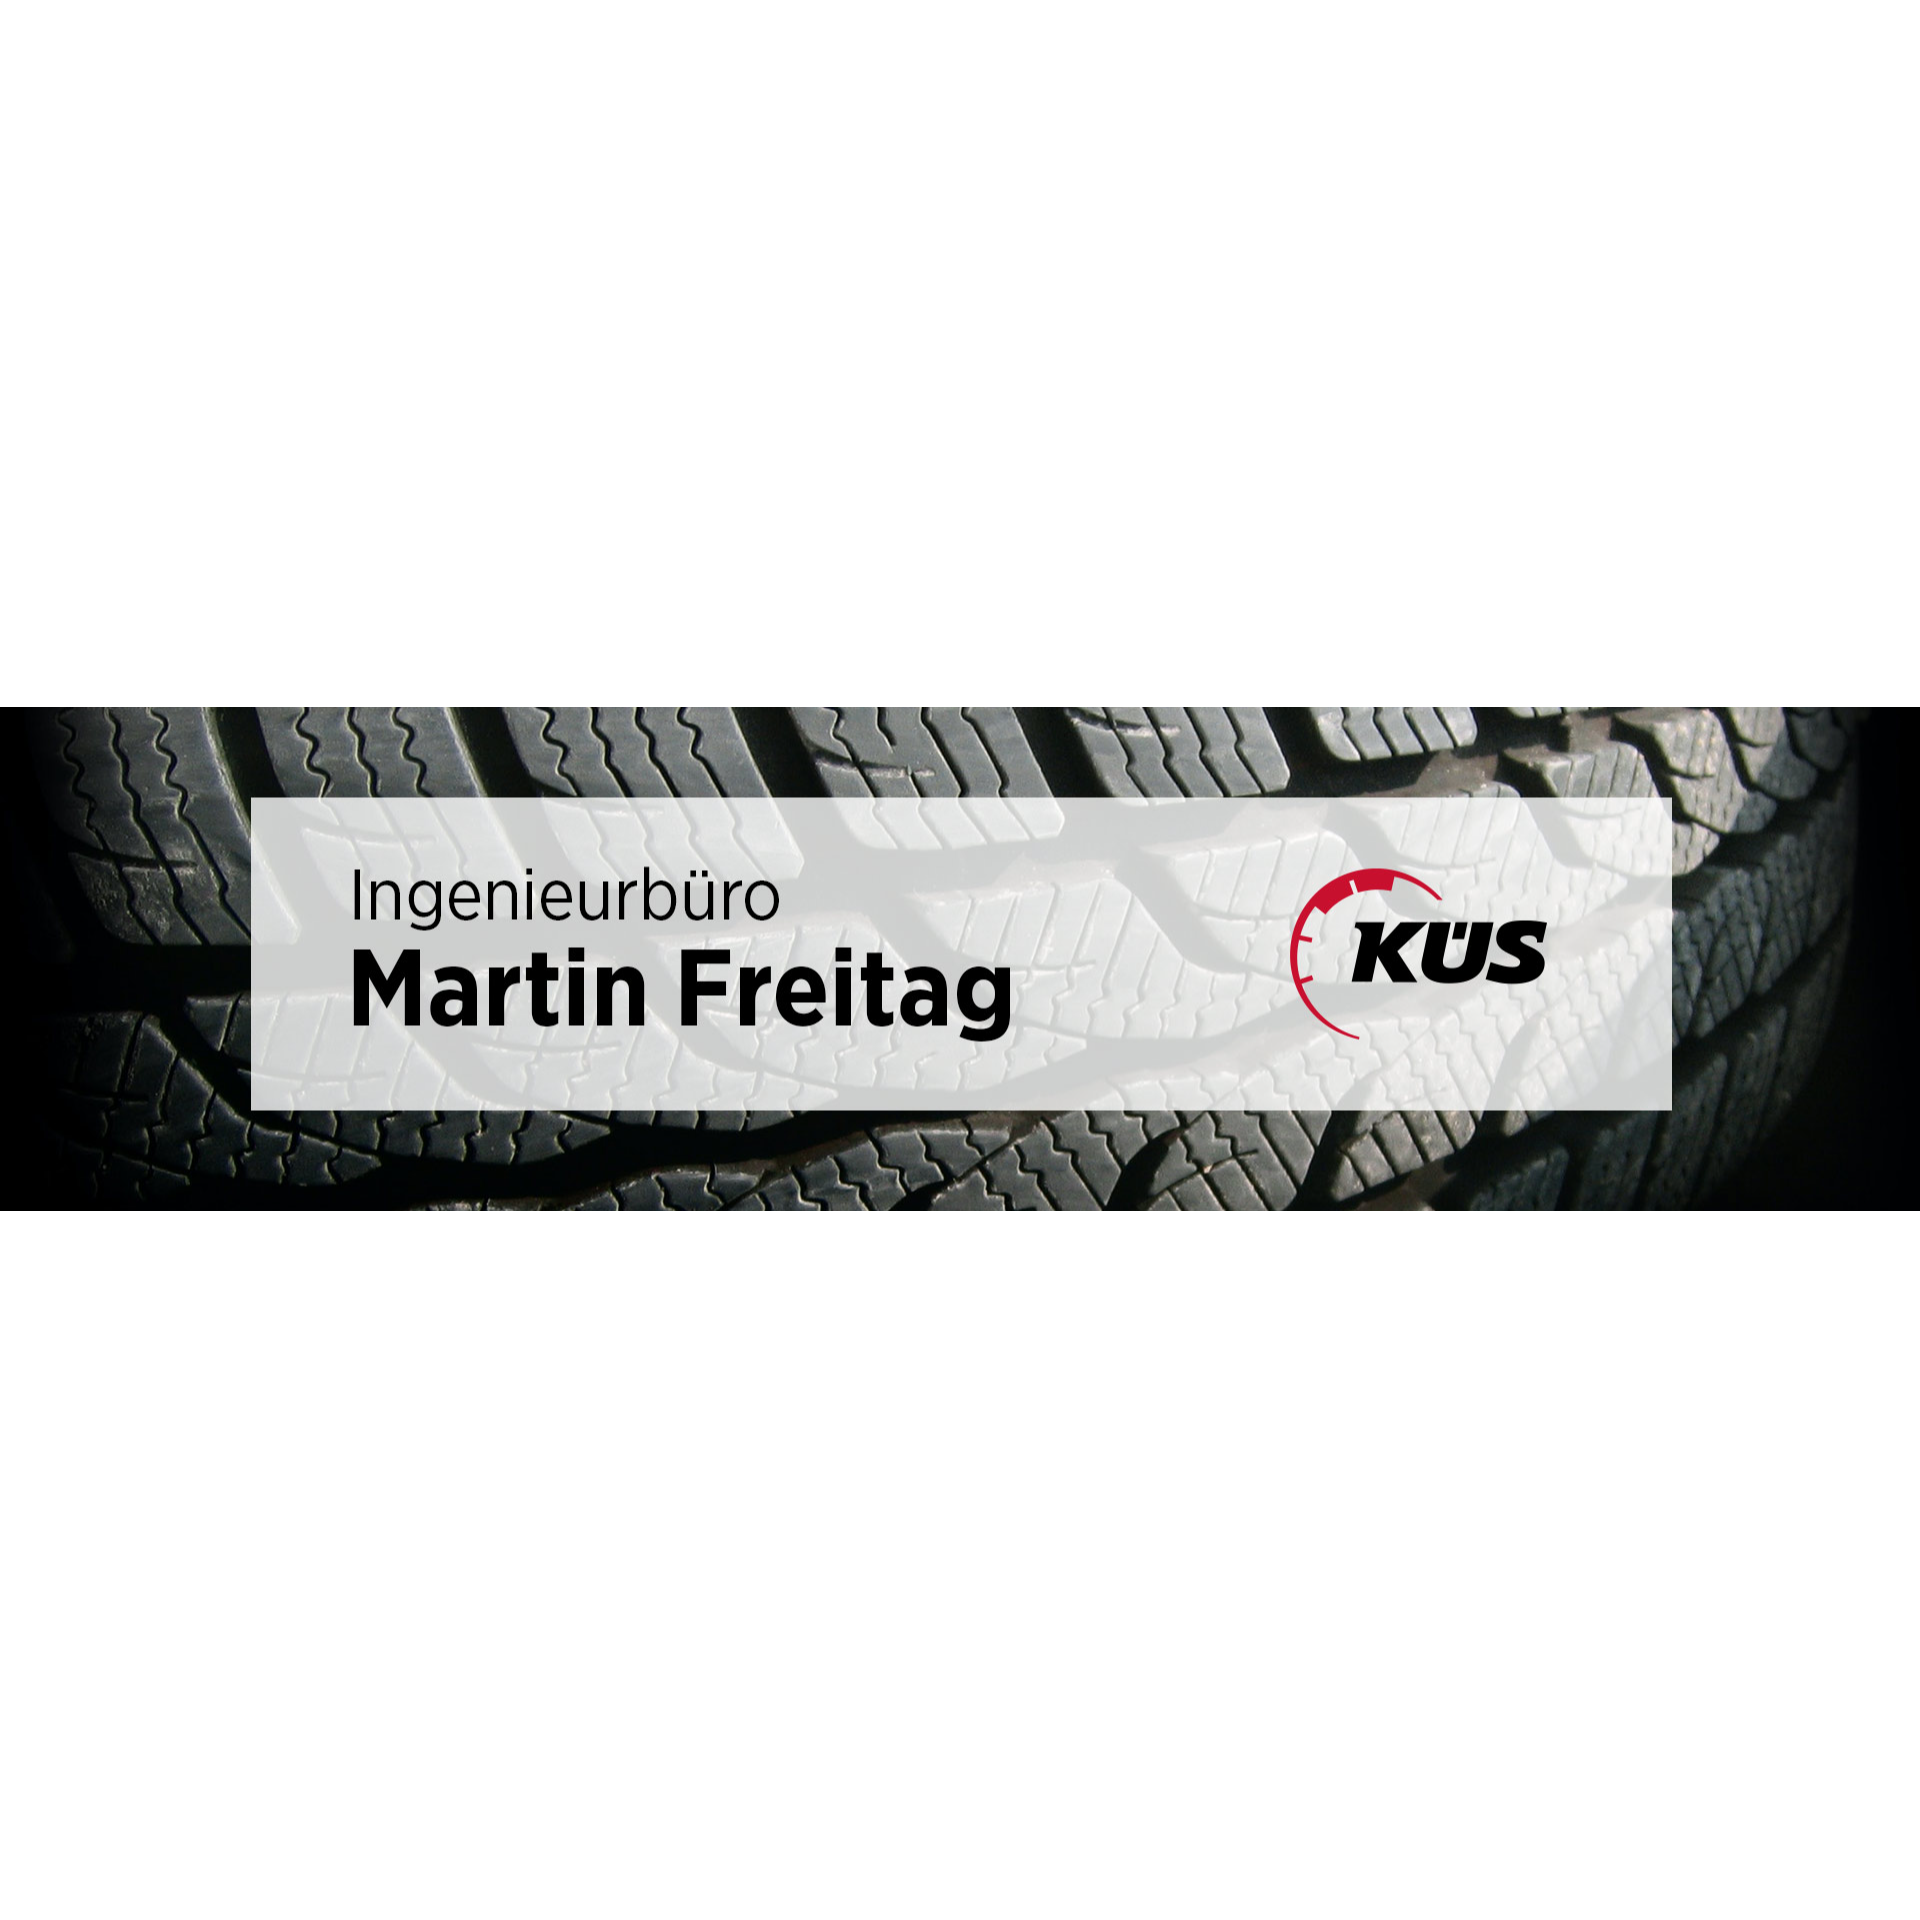 Ingenieurbüro Martin Freitag in Bergisch Gladbach - Logo